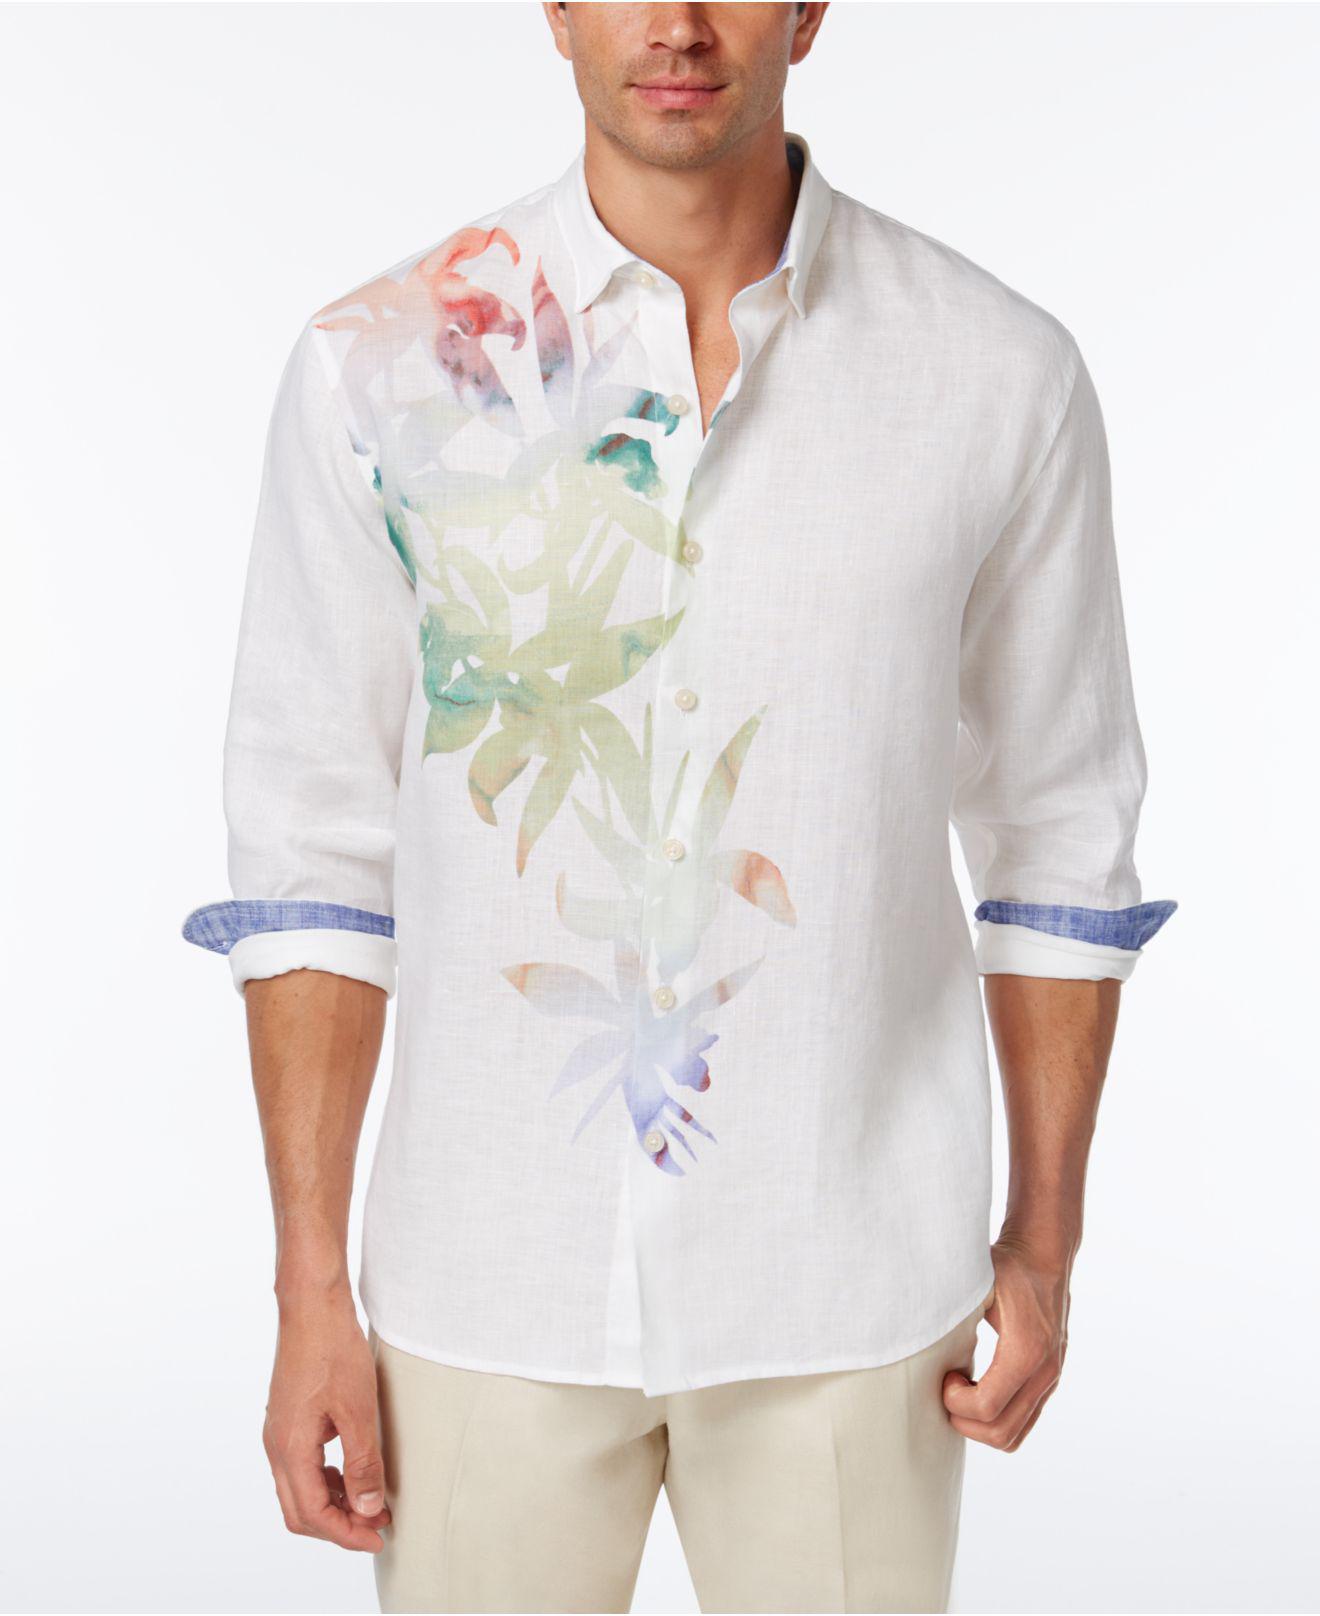 tommy bahama white linen shirt